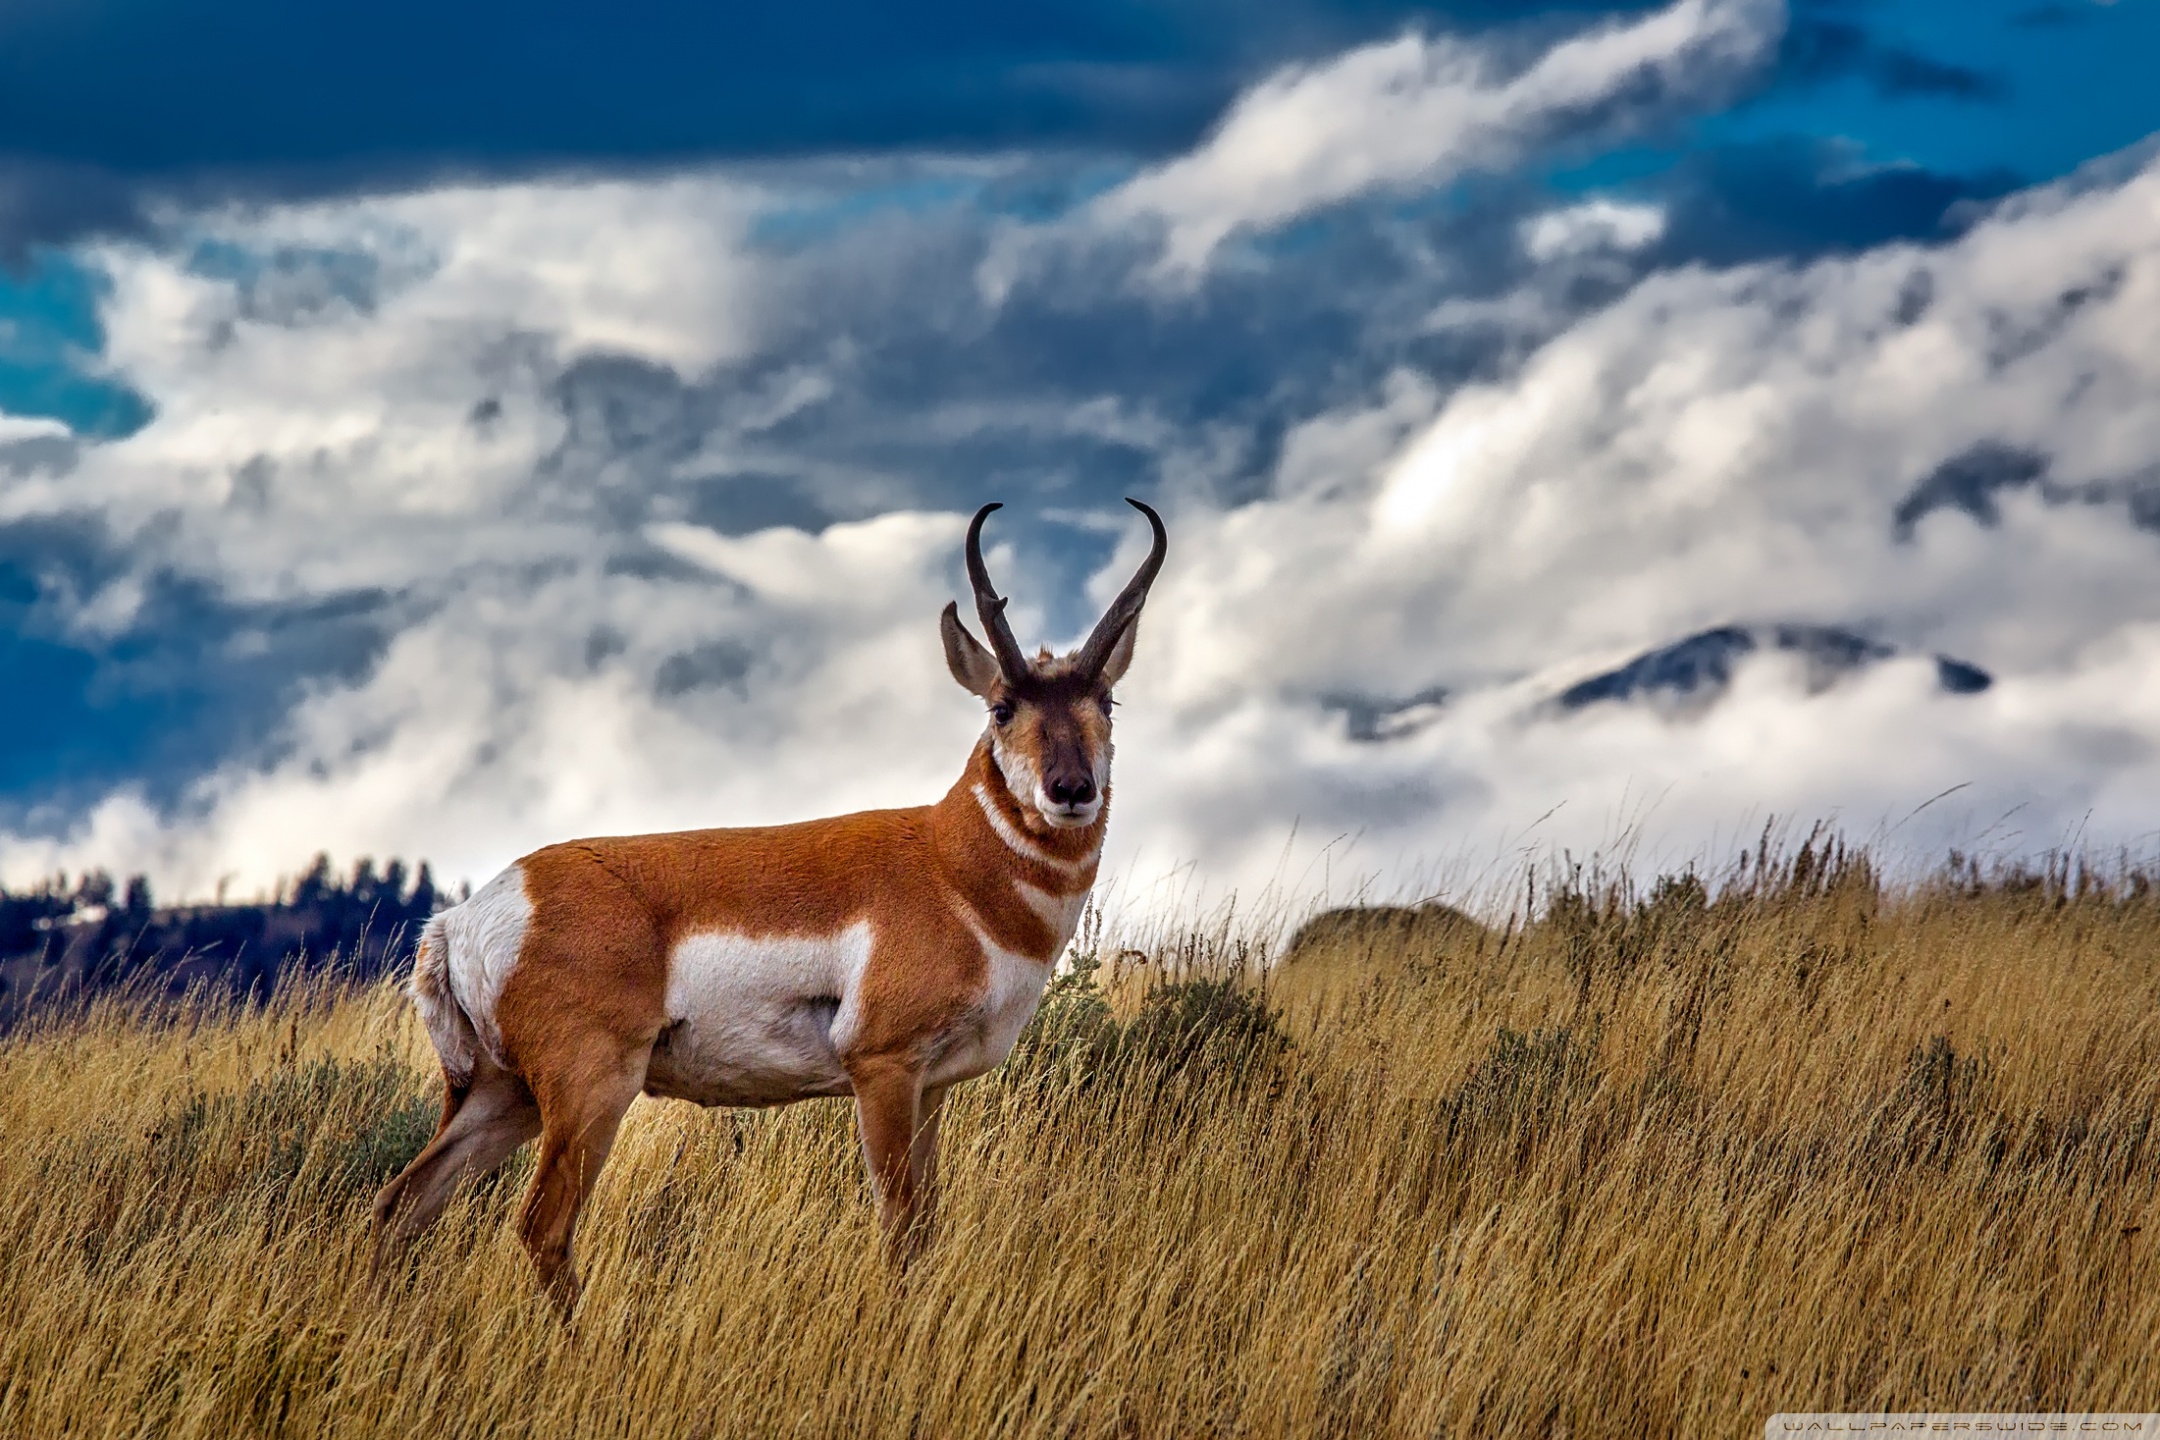 Pronghorn Antelope Ultra 2K Desk 4K Backgrounds Wallpapers for